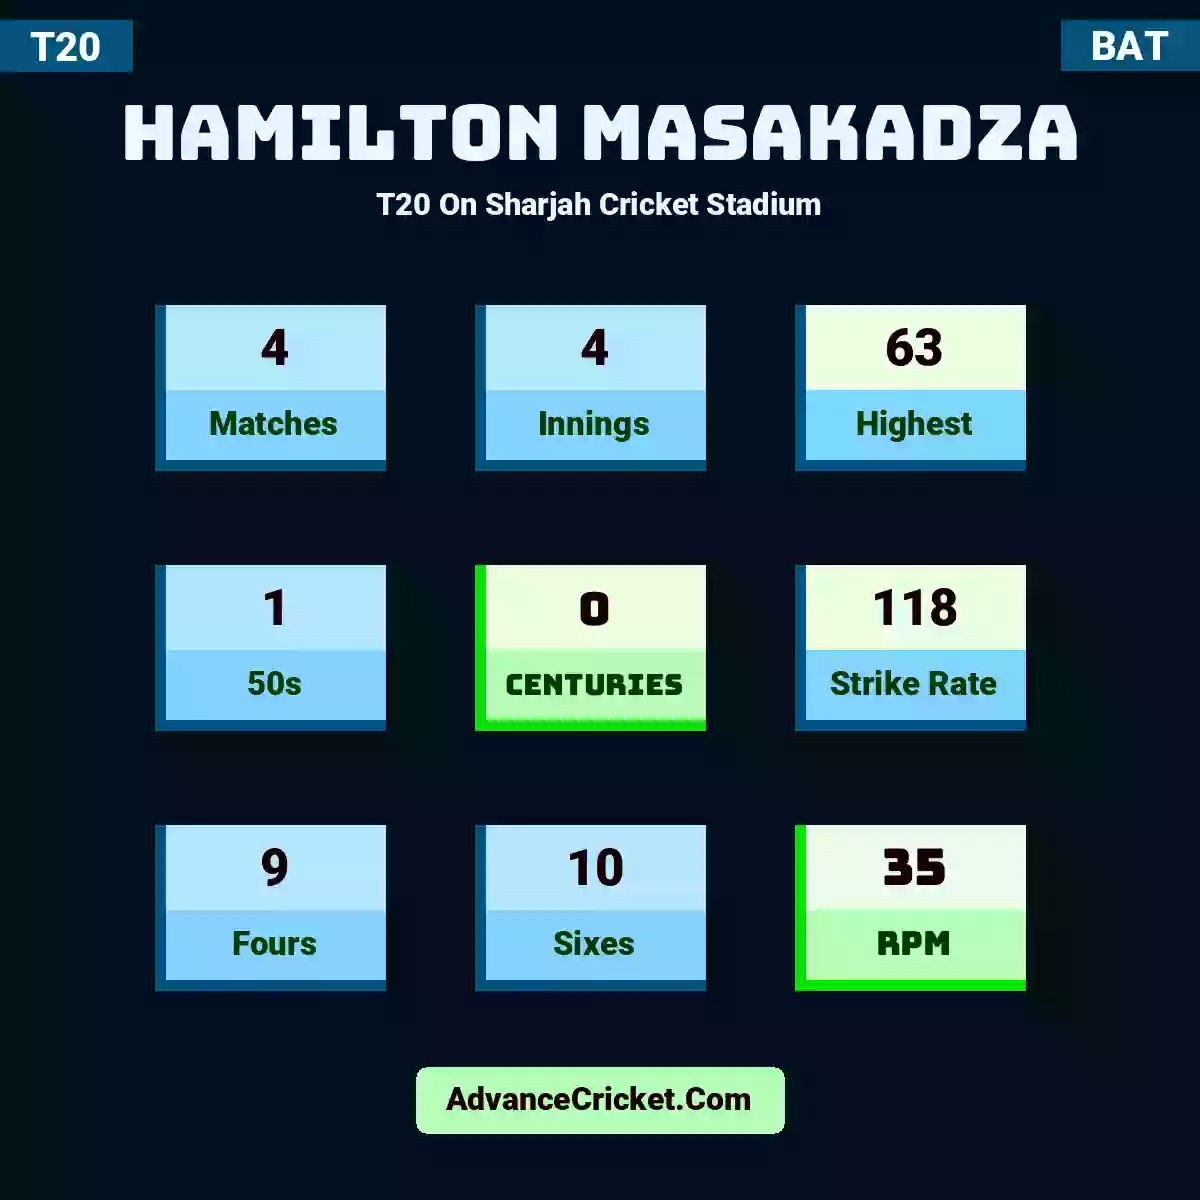 Hamilton Masakadza T20  On Sharjah Cricket Stadium, Hamilton Masakadza played 4 matches, scored 63 runs as highest, 1 half-centuries, and 0 centuries, with a strike rate of 118. H.Masakadza hit 9 fours and 10 sixes, with an RPM of 35.